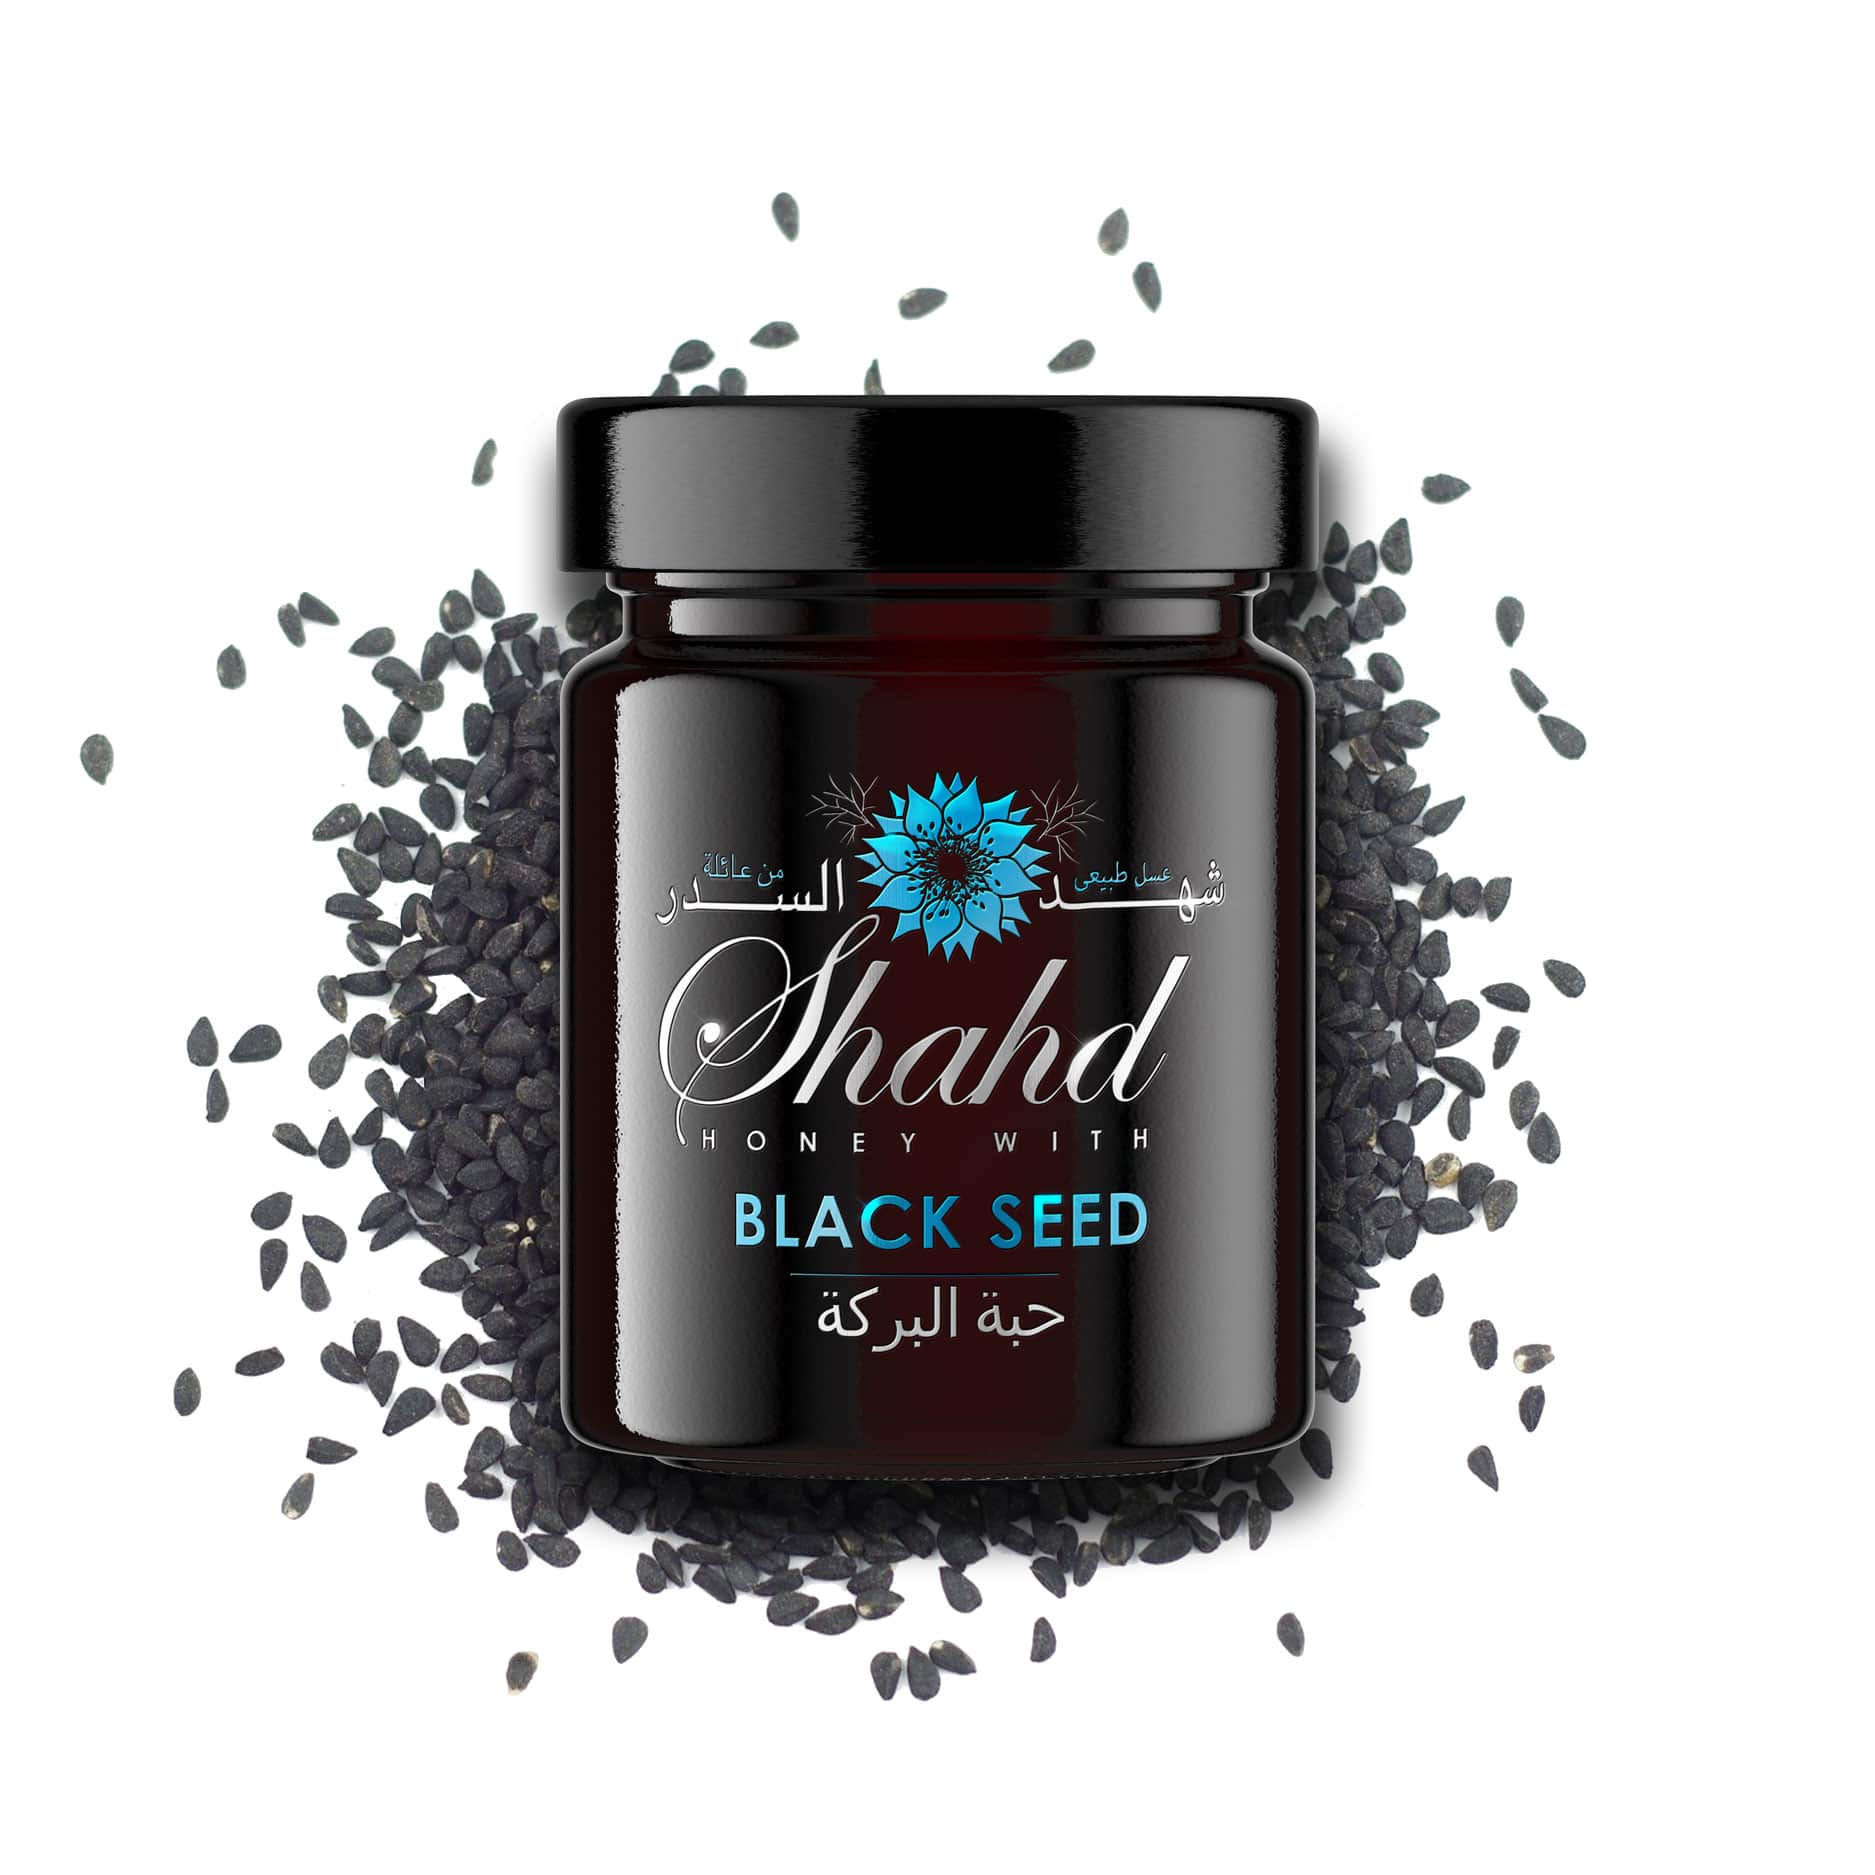 Shahd Honey with Black Seed 454g